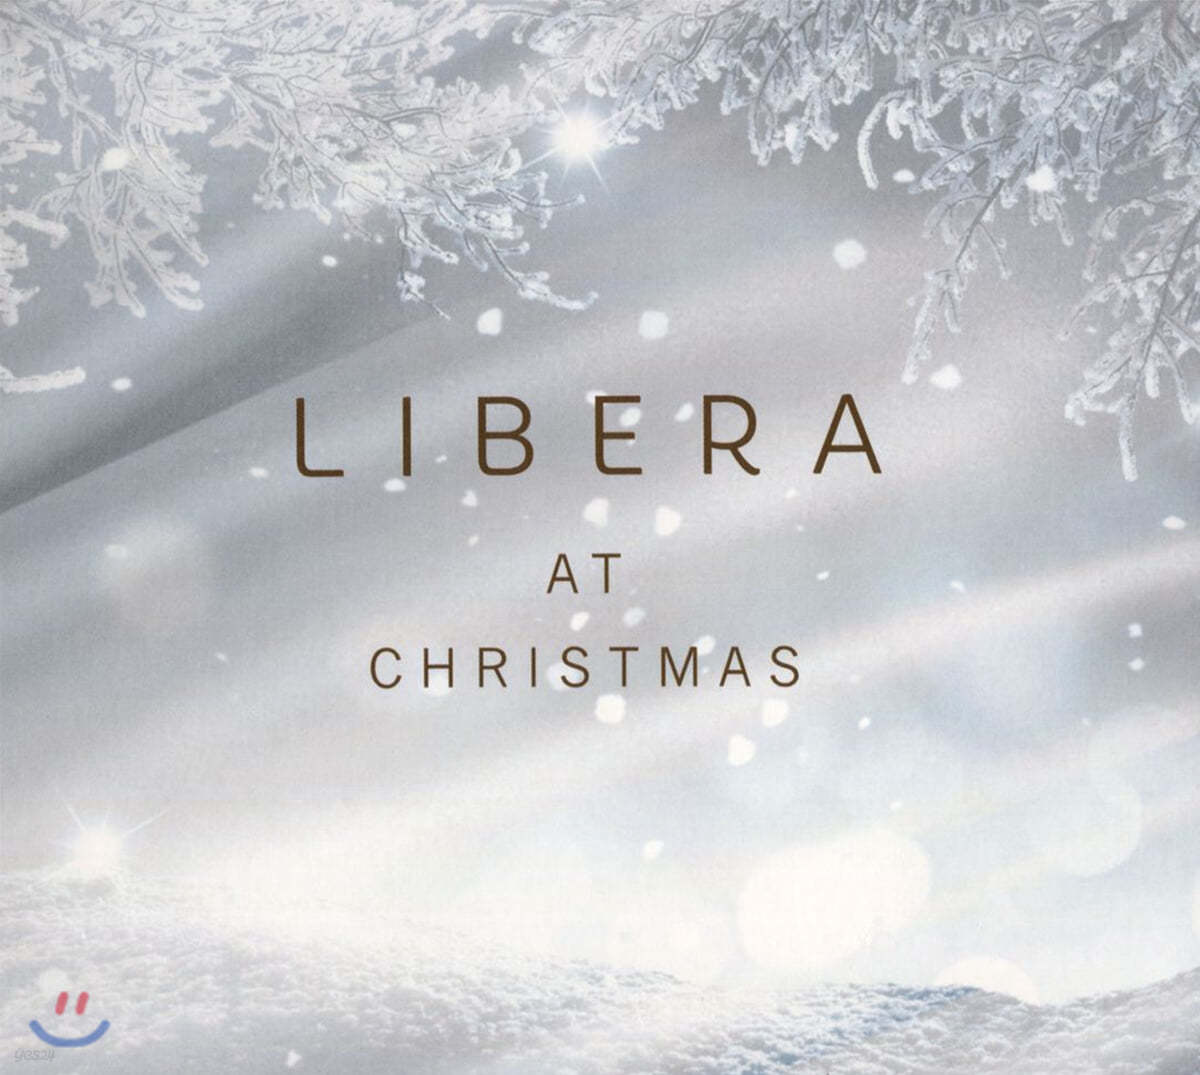 Libera At Christmas 리베라 합창단 2016 크리스마스 앨범